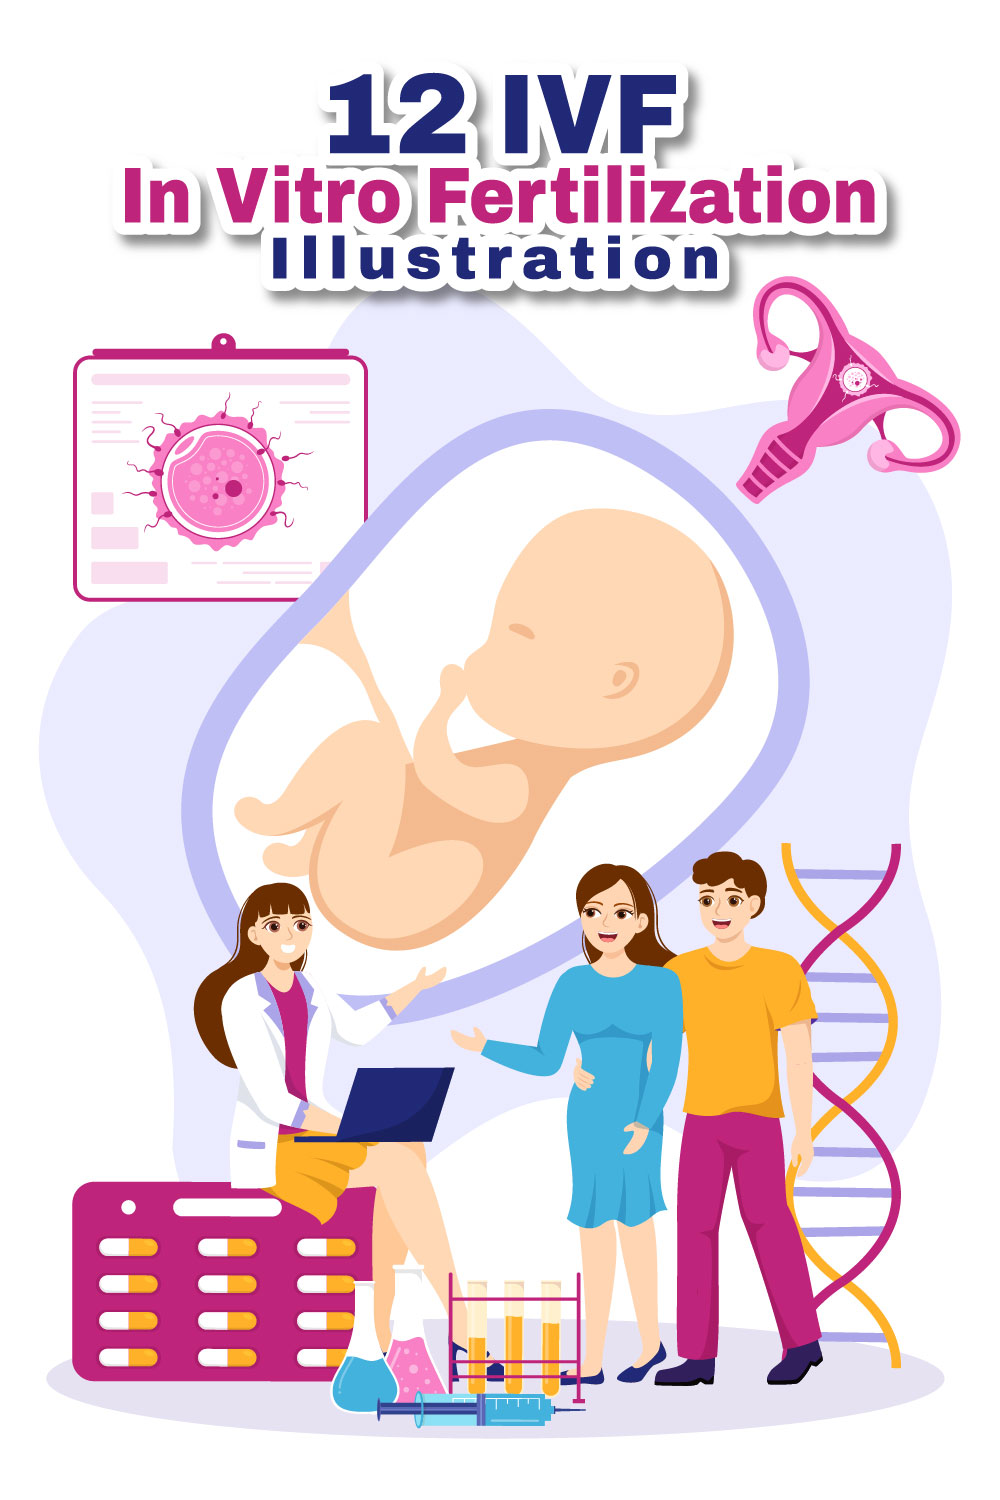 12 IVF or In Vitro Fertilization Illustration pinterest preview image.